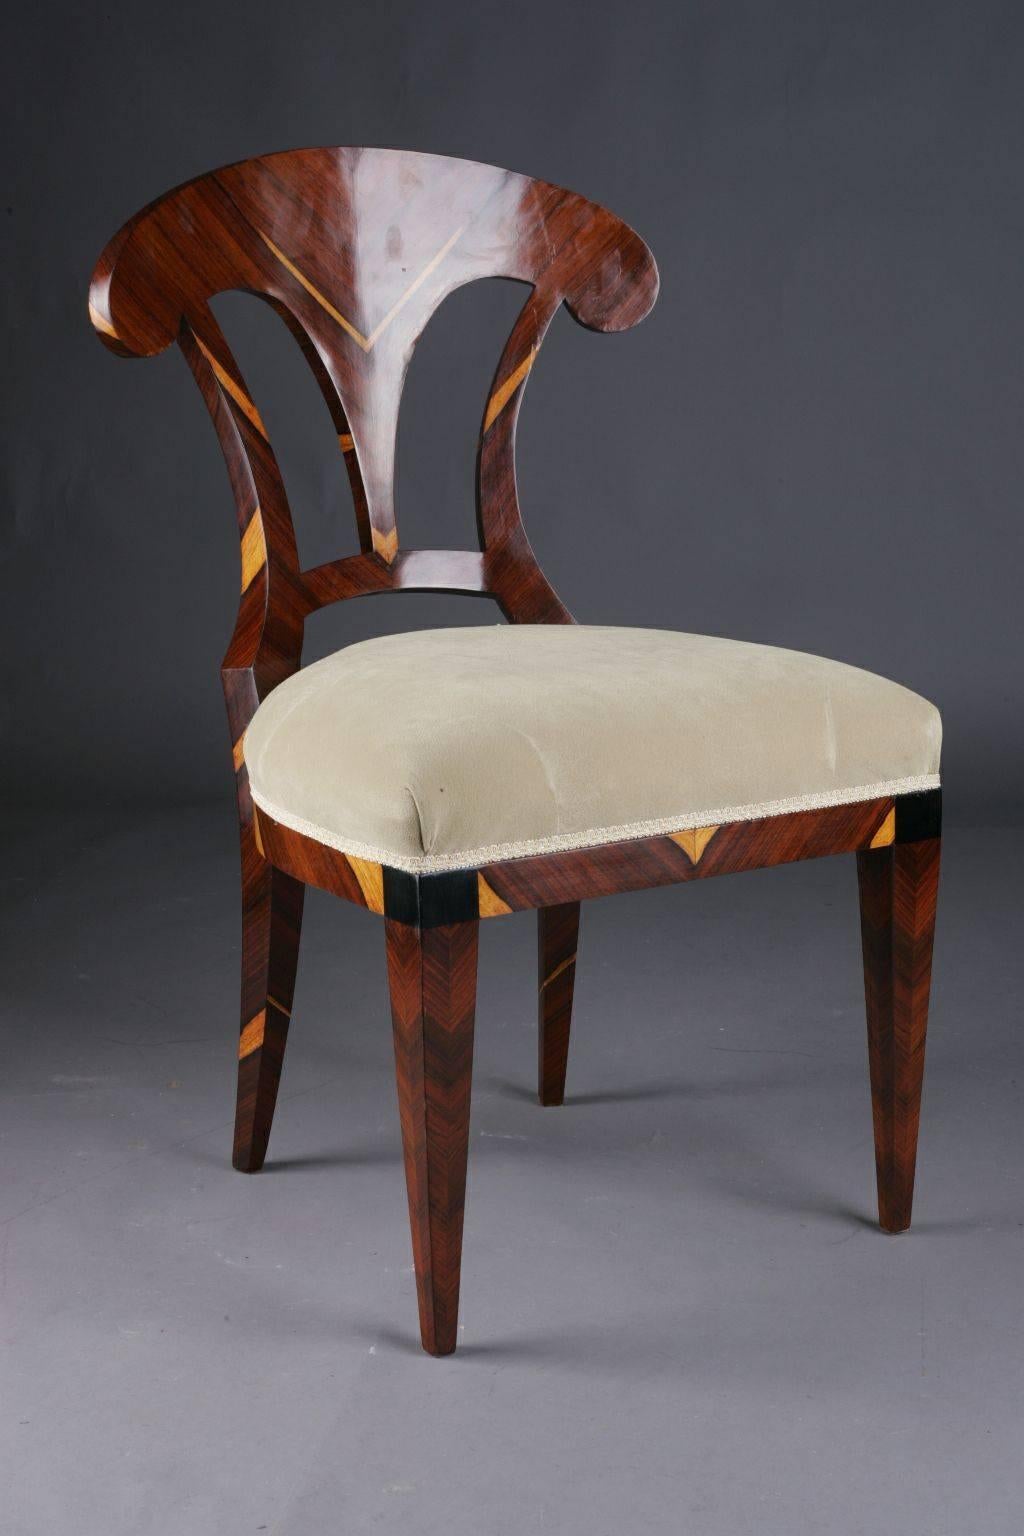 Vienna Biedermeir chair after Josef Danhauer.
Solid beechwood with wood veneer. Seat classical upholstered. 

(C-Sam-35).